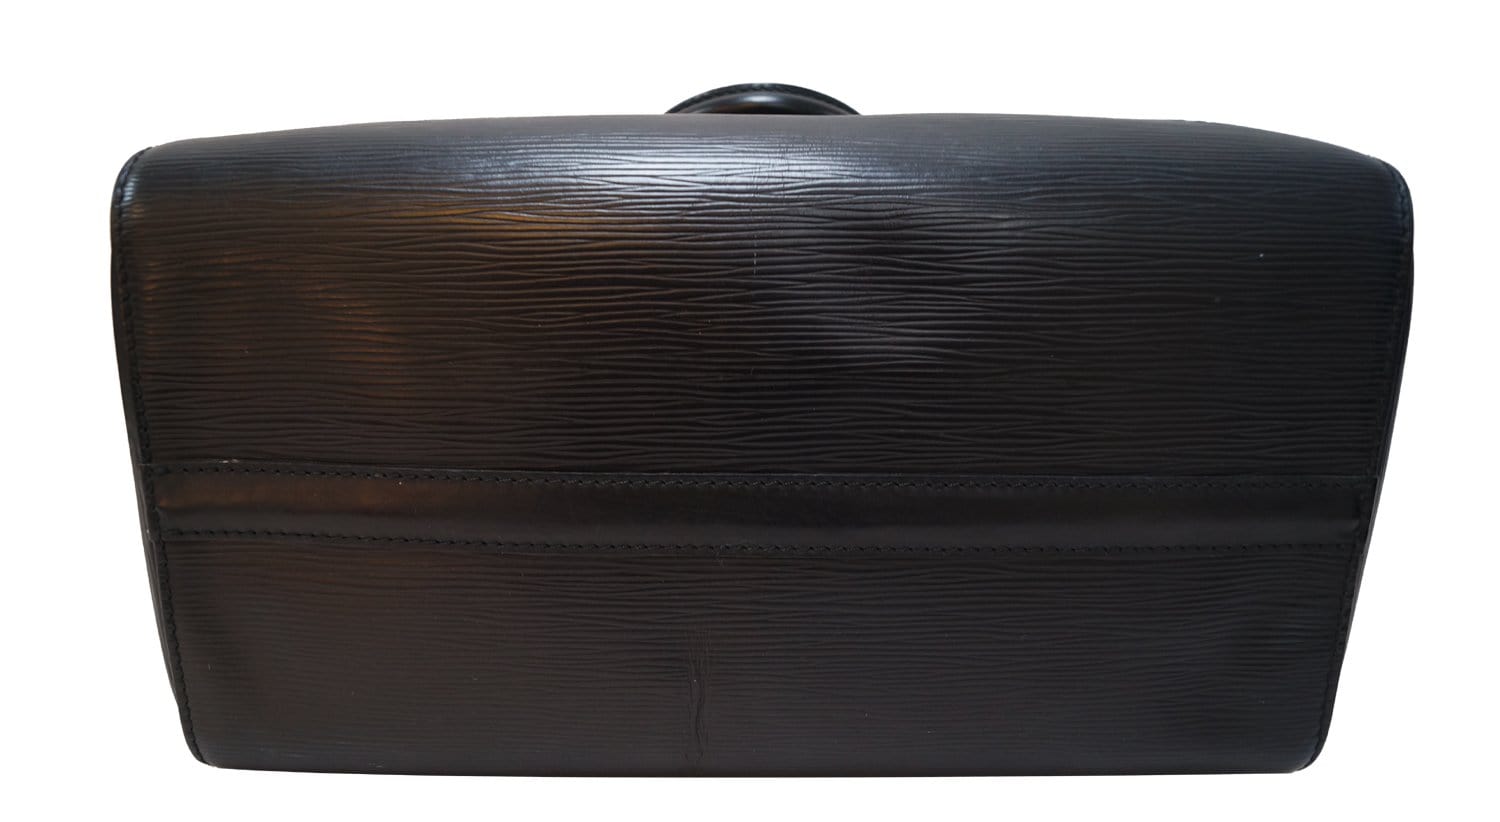 Louis Vuitton Speedy Handbag 388837